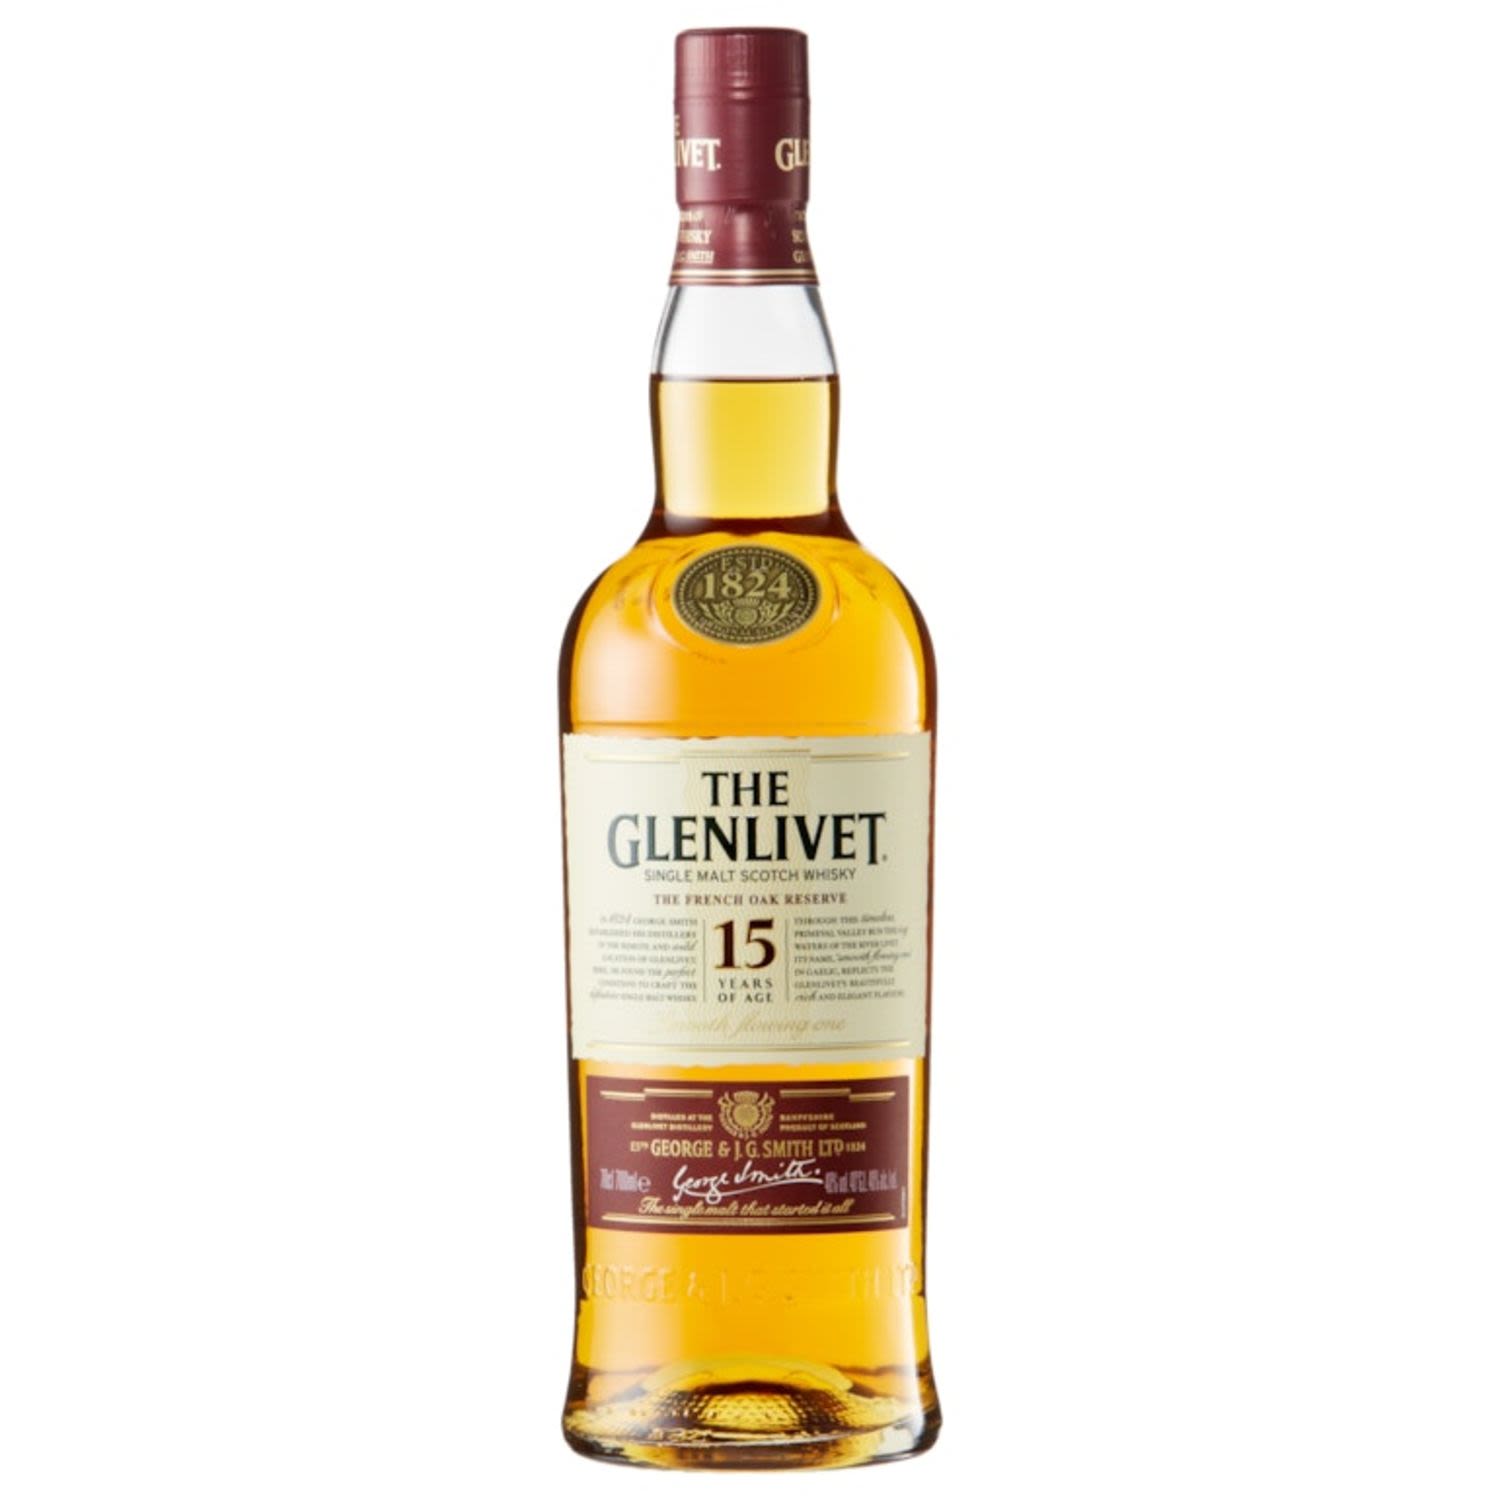 The Glenlivet 15 Year Old Scotch Whisky 700mL Bottle